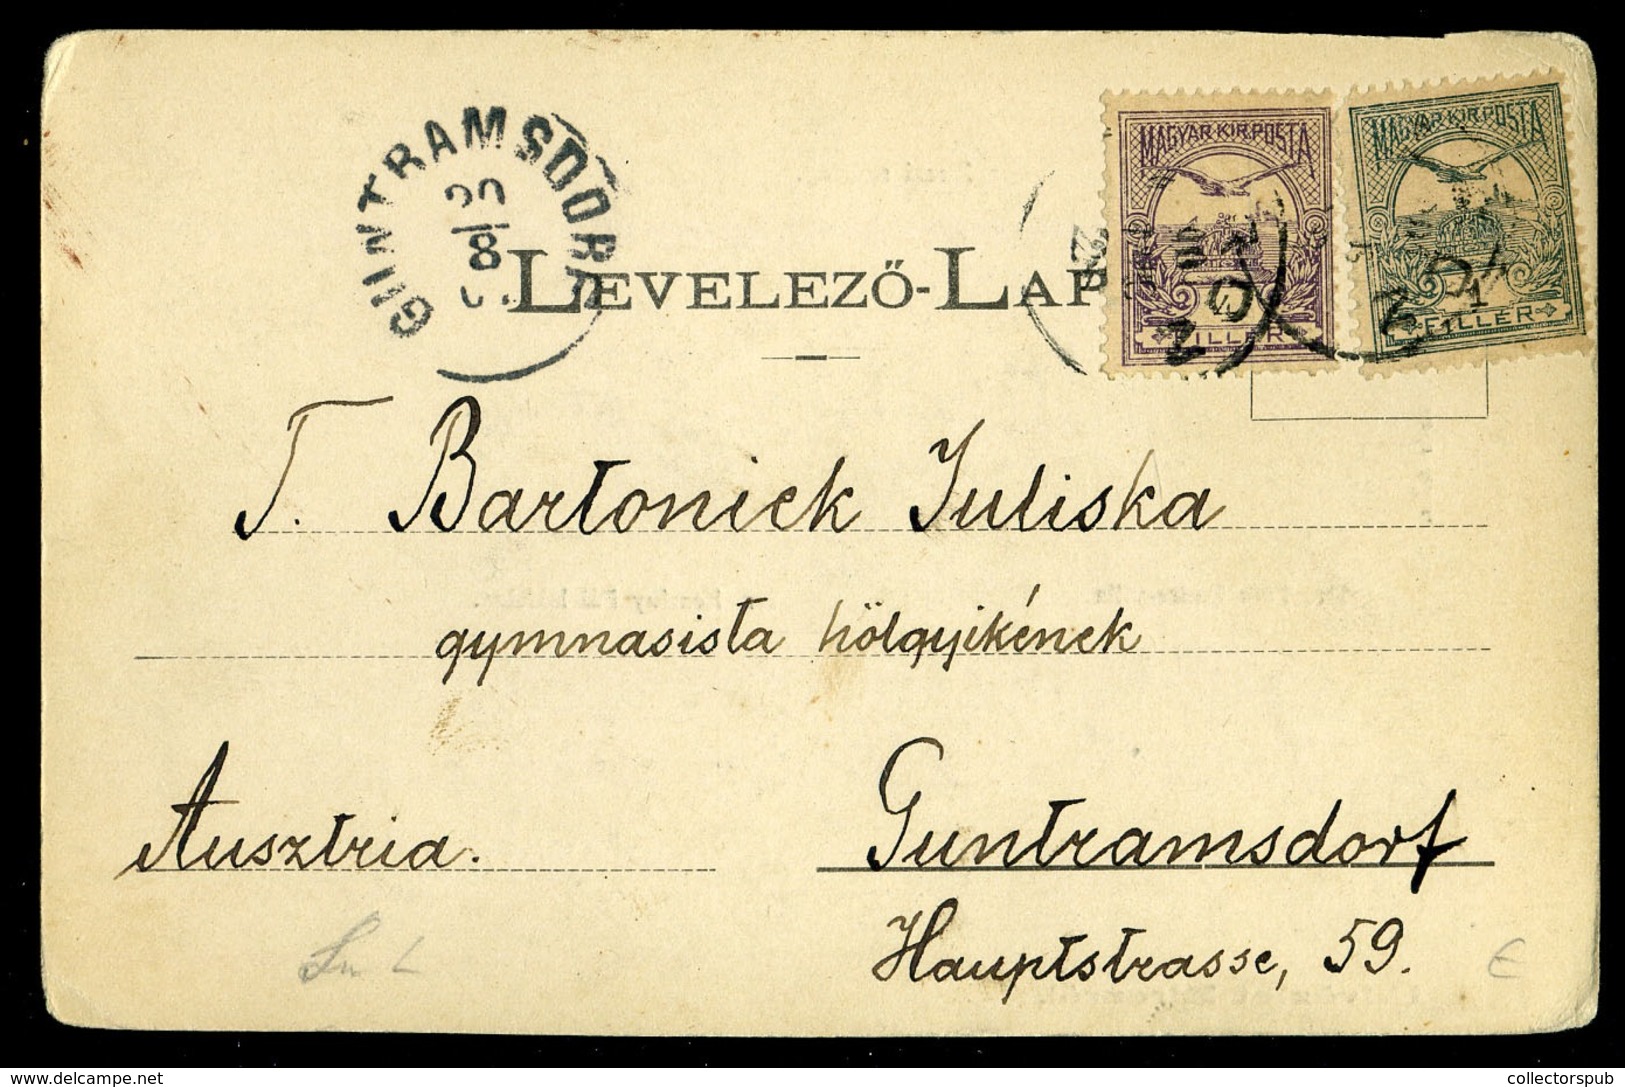 ZIRC 1900. Régi Képeslap - Hongarije